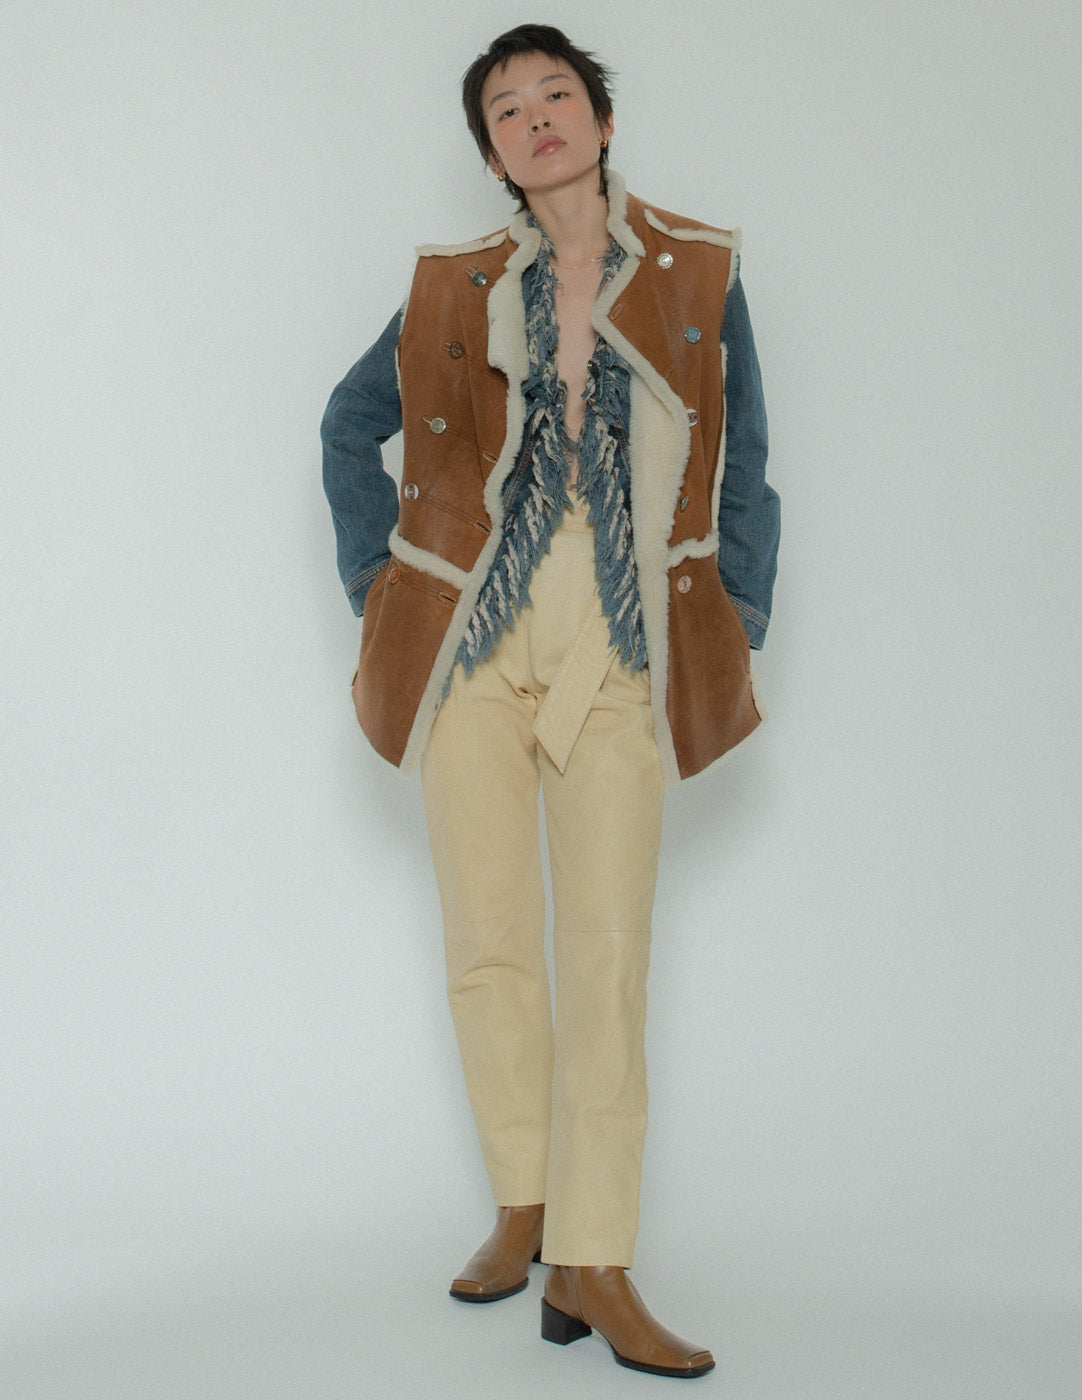 Plein Sud vintage denim jacket with fringe trim